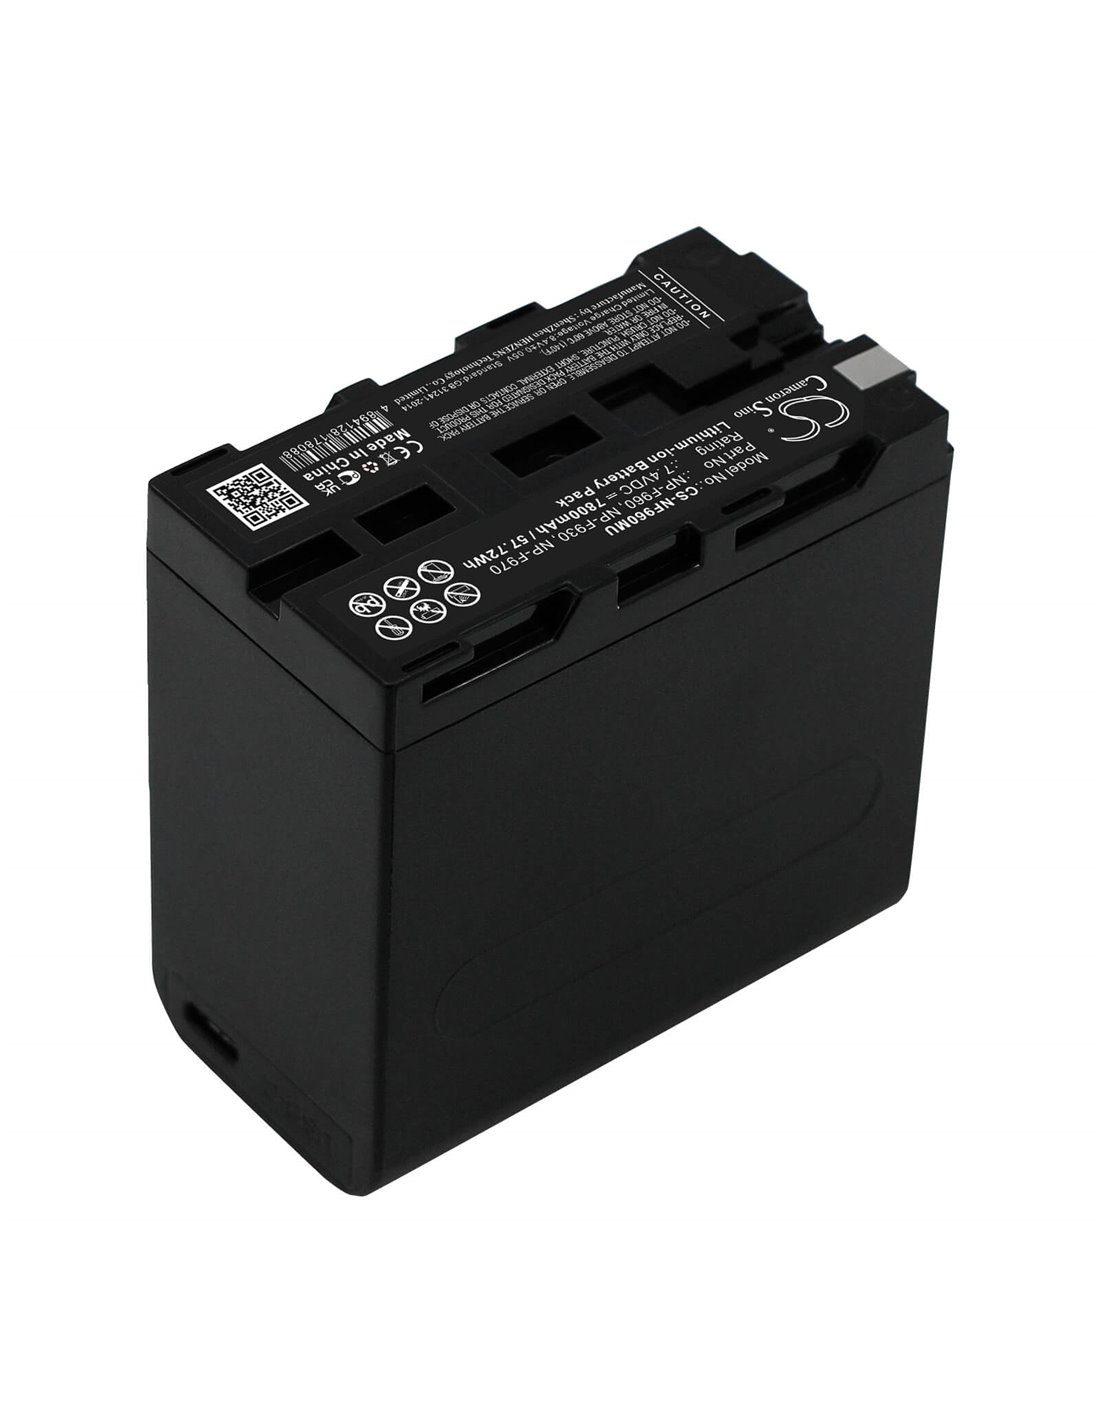 7.4V, Li-ion, 7800mAh, Battery fits Sound Devices, 633 Mixer, Pix 240i, 57.72Wh